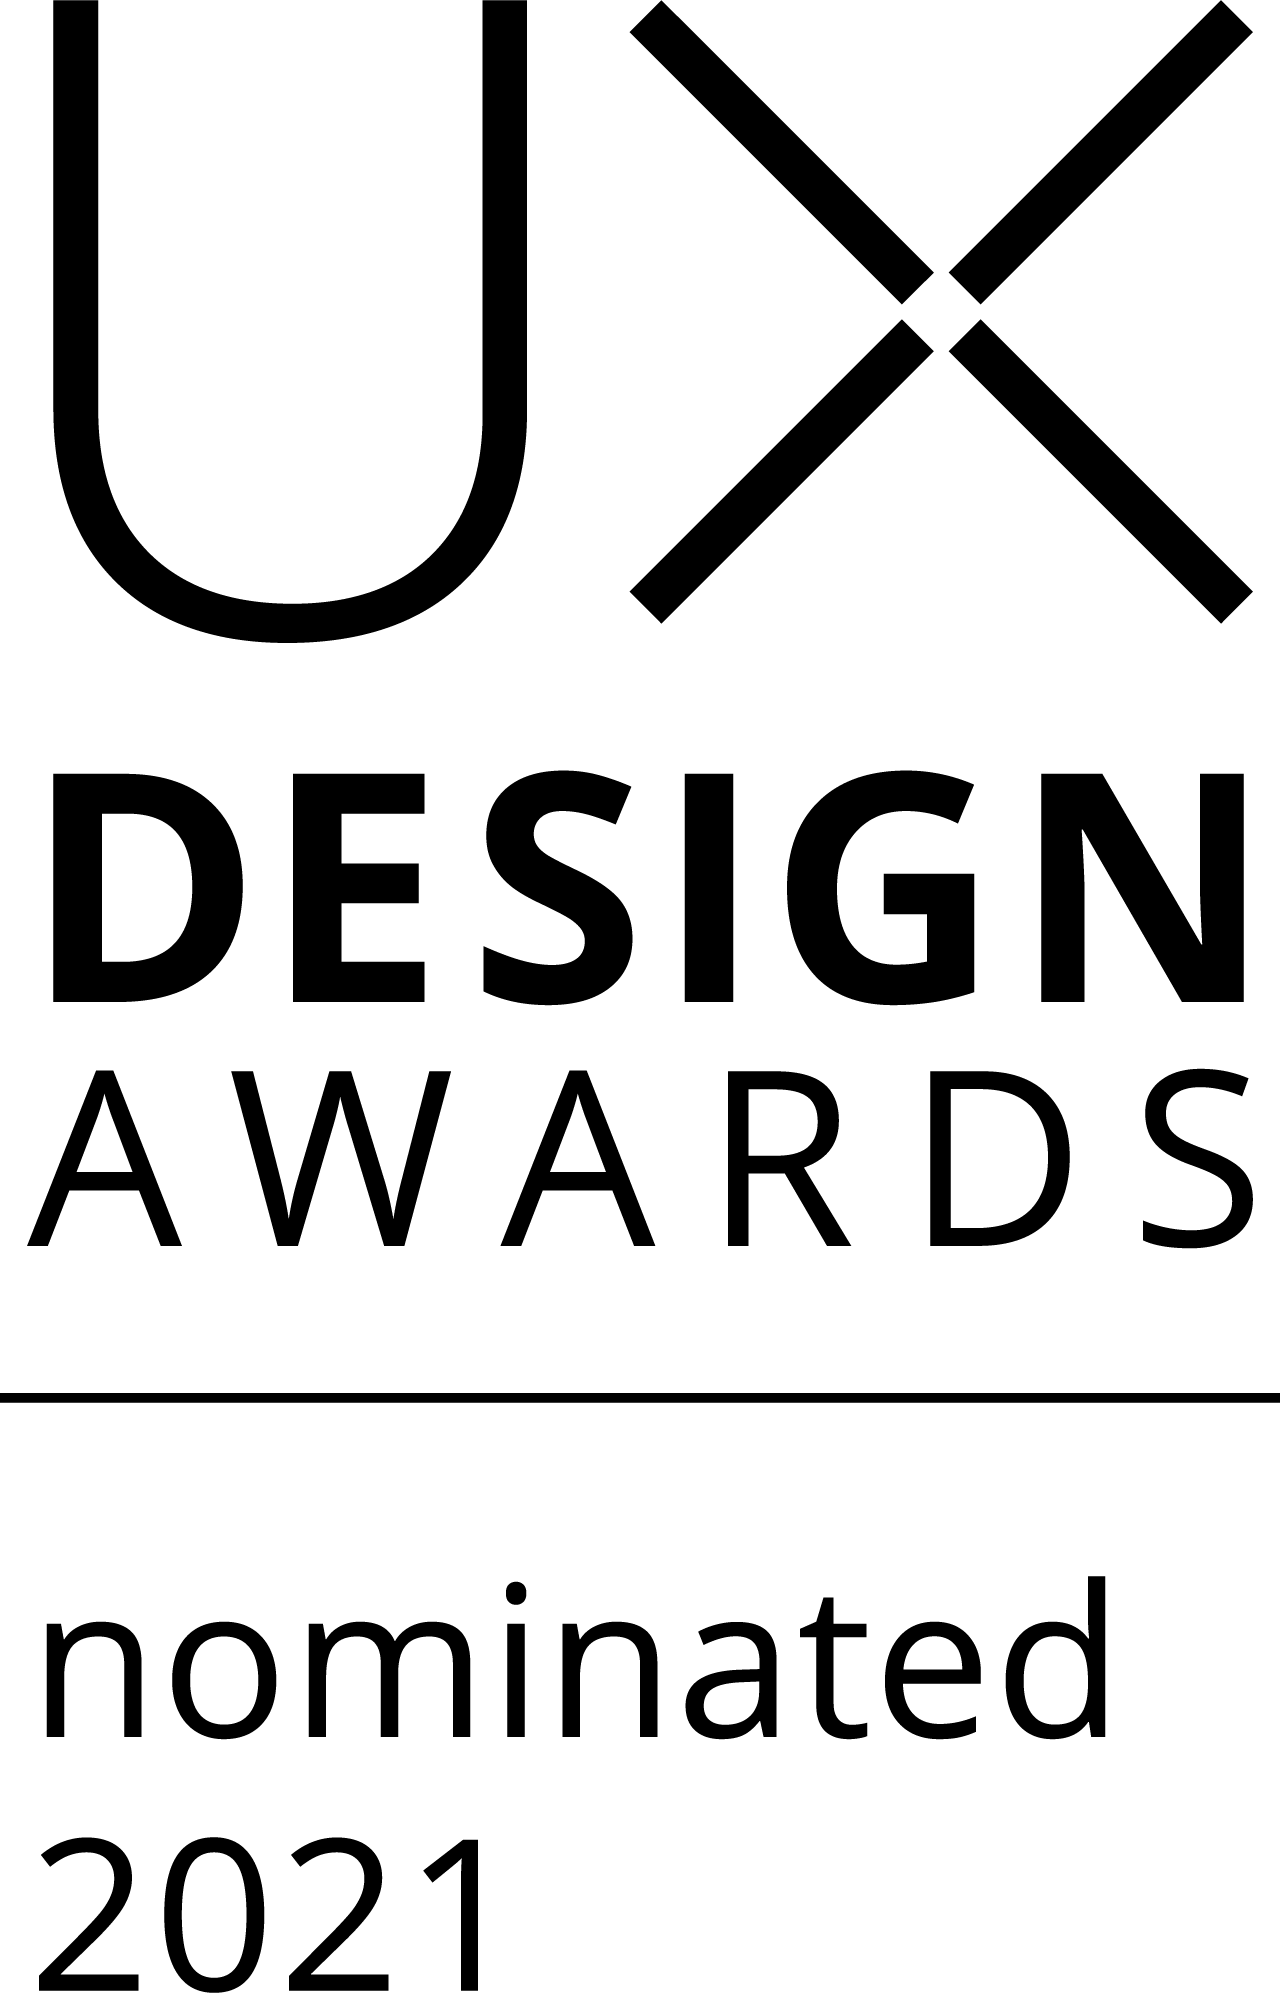 UX Design Award – Nominated 2021